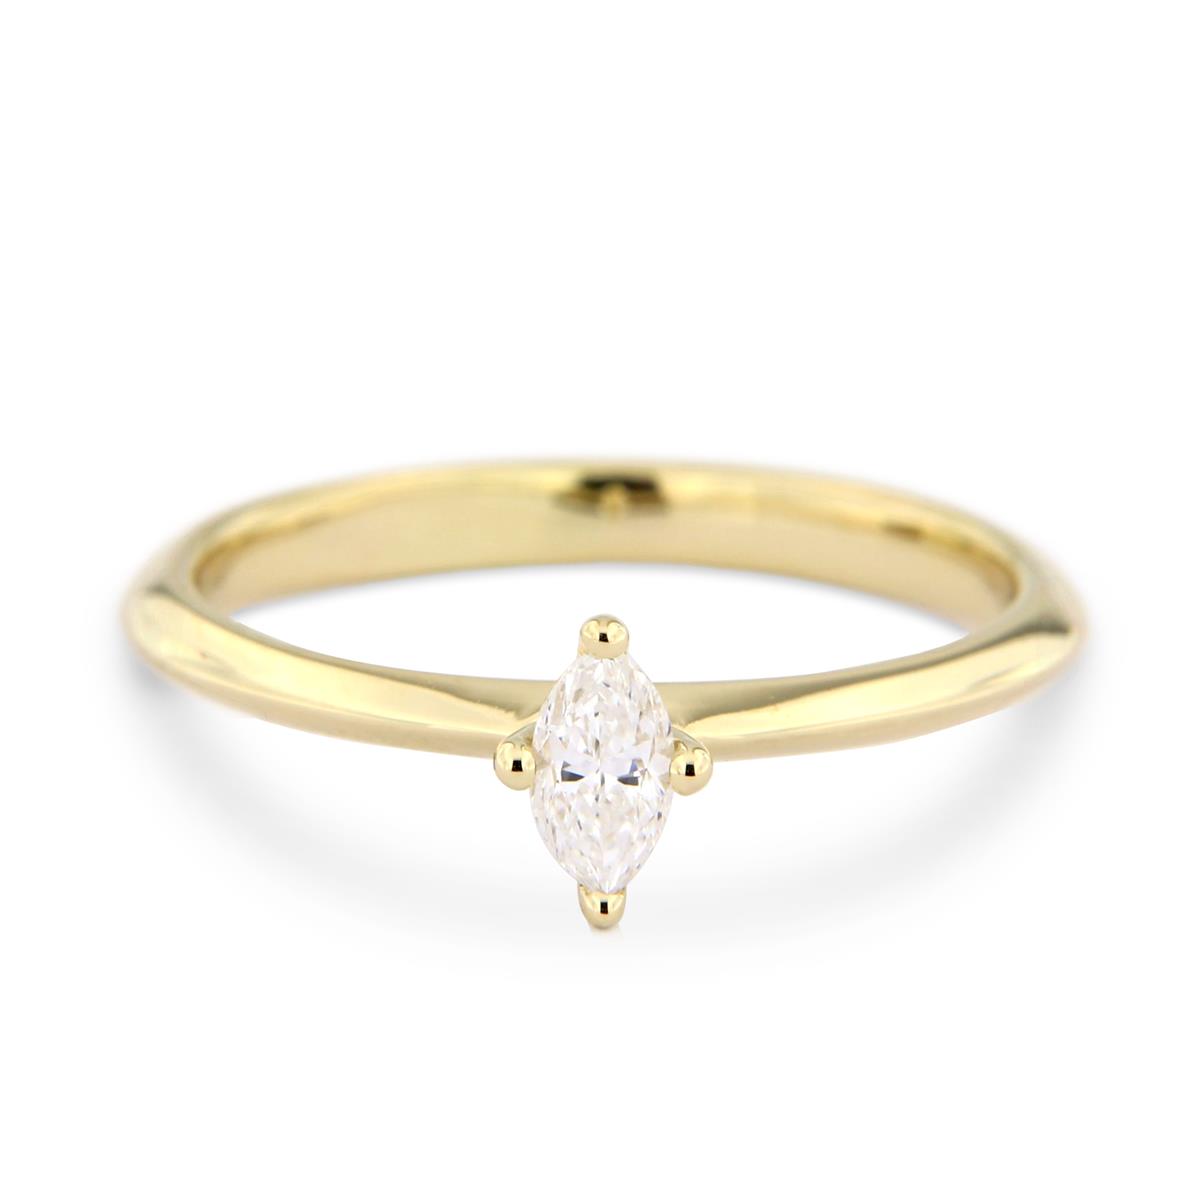 Katie g. Jewellery - Navette Diamond Solitaire Ring_EUR 3150